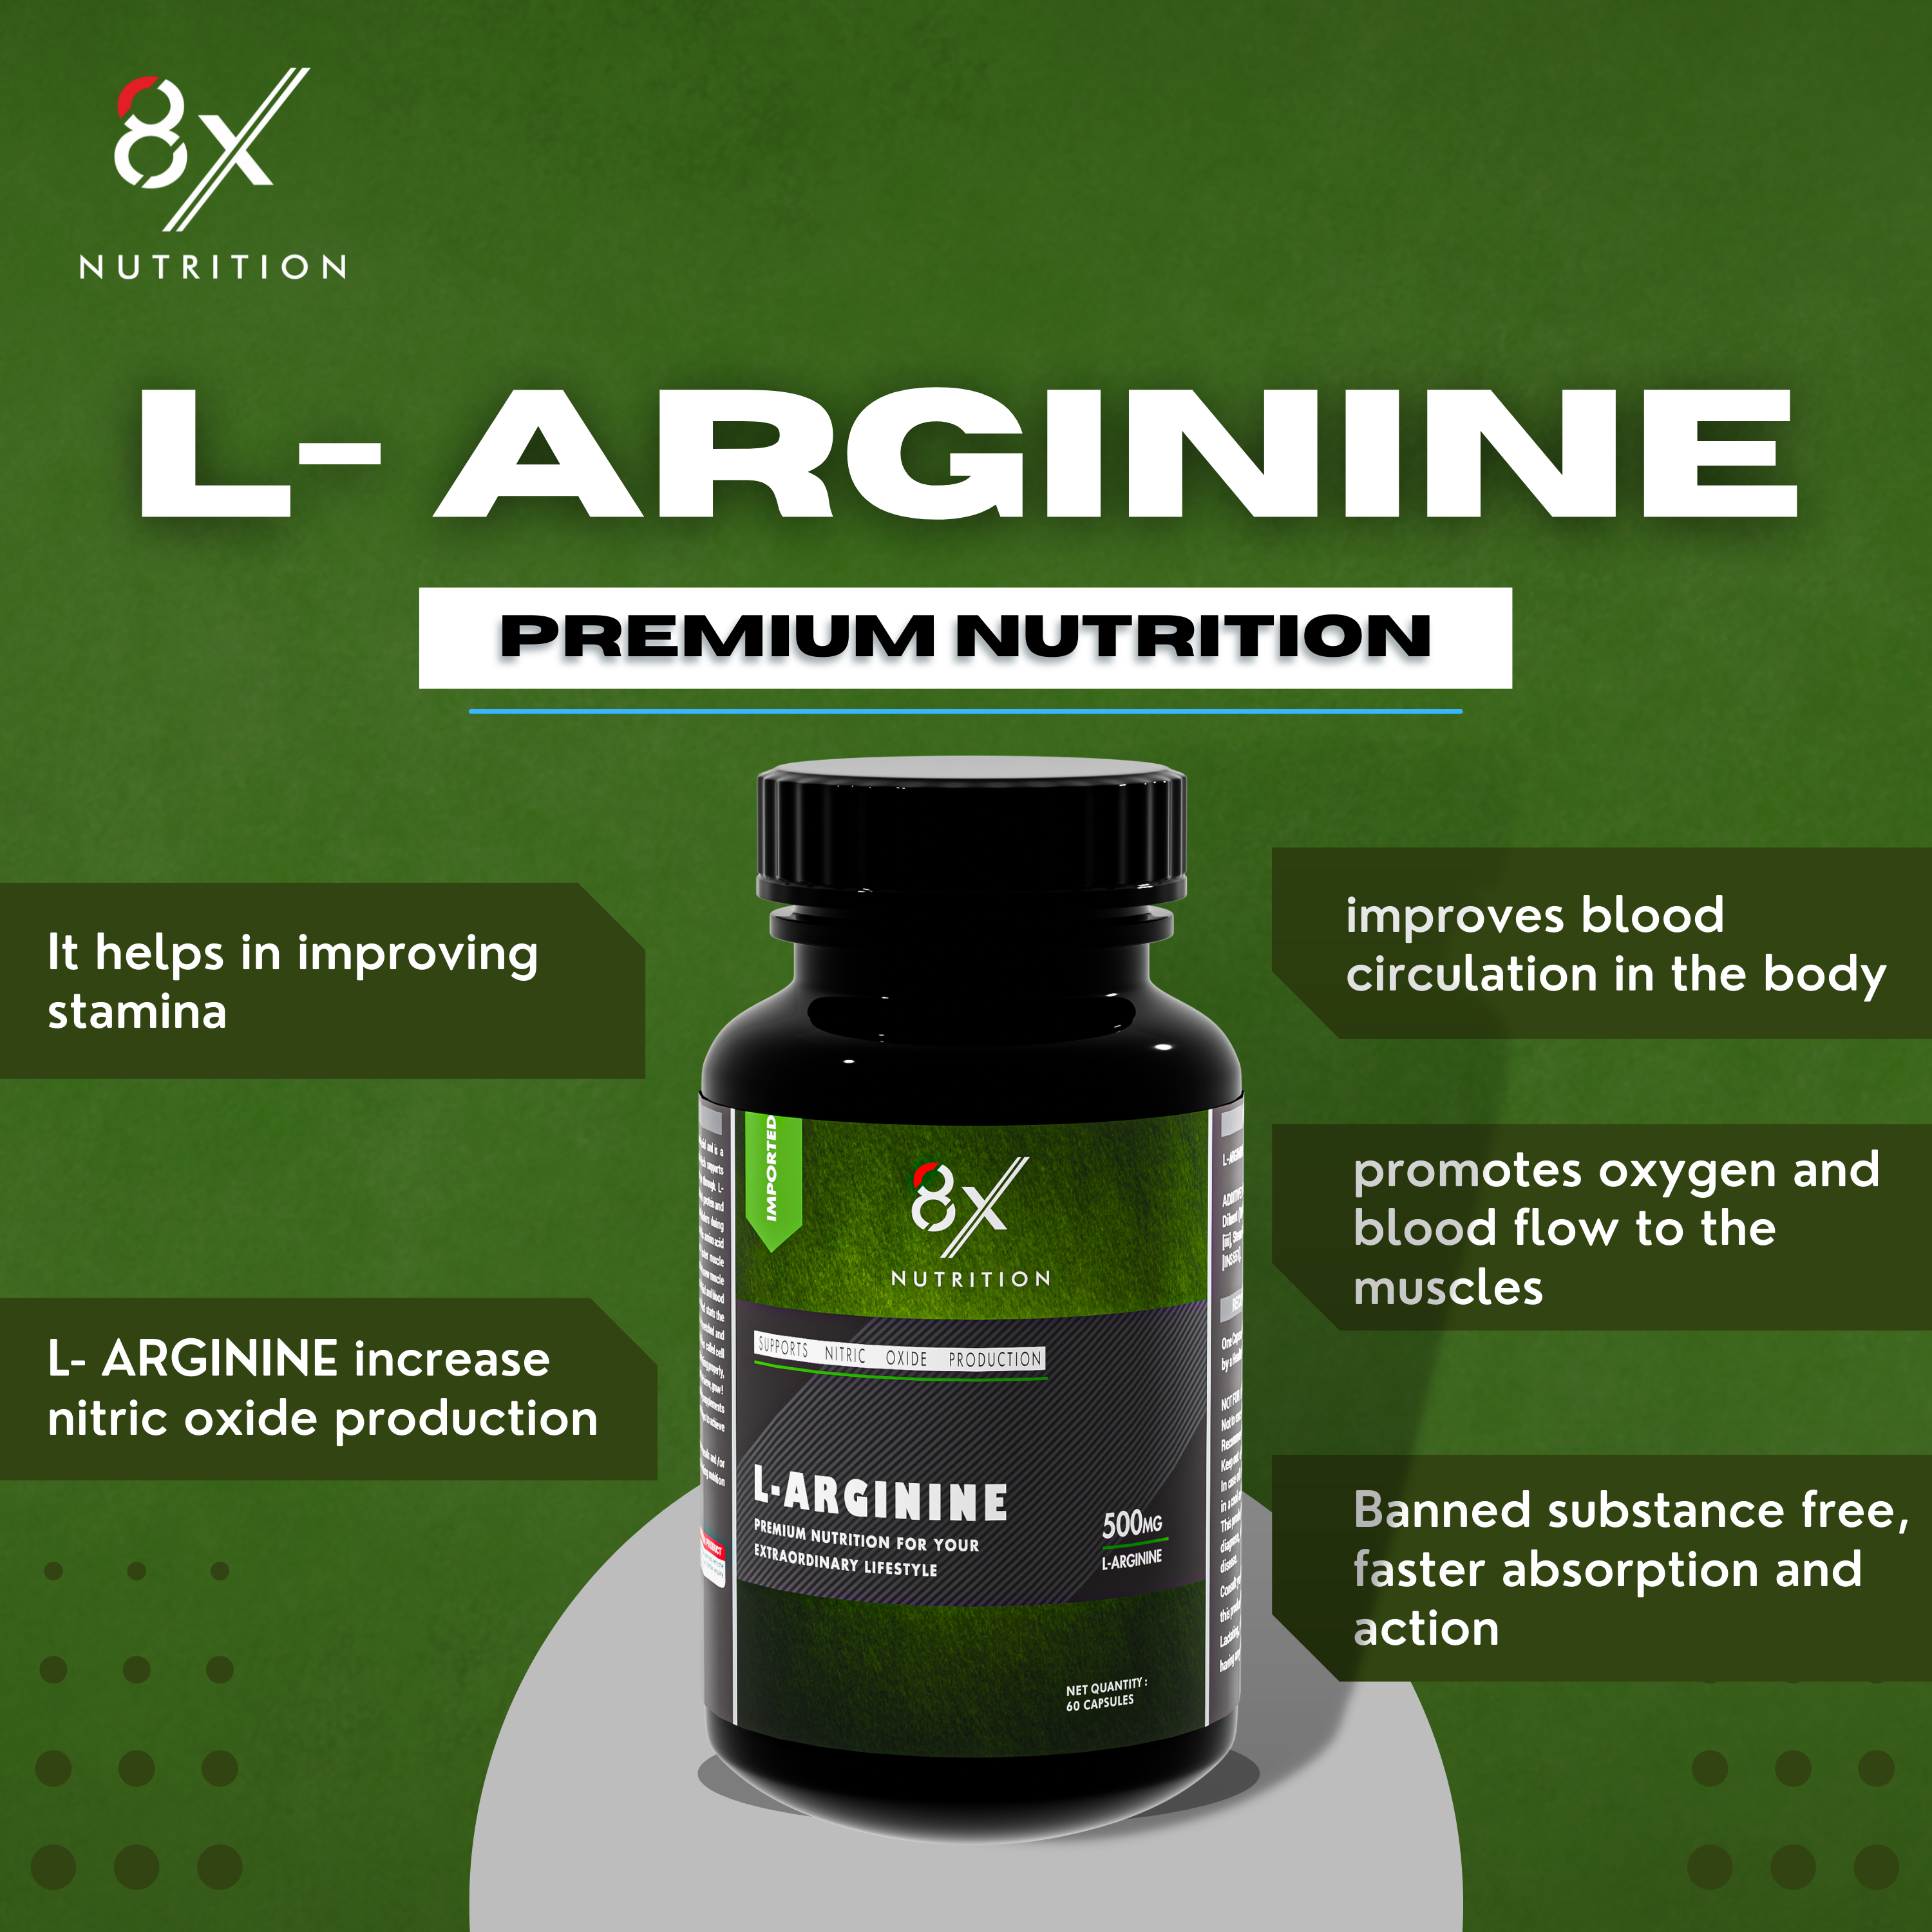 8X Nutrition L-Arginine